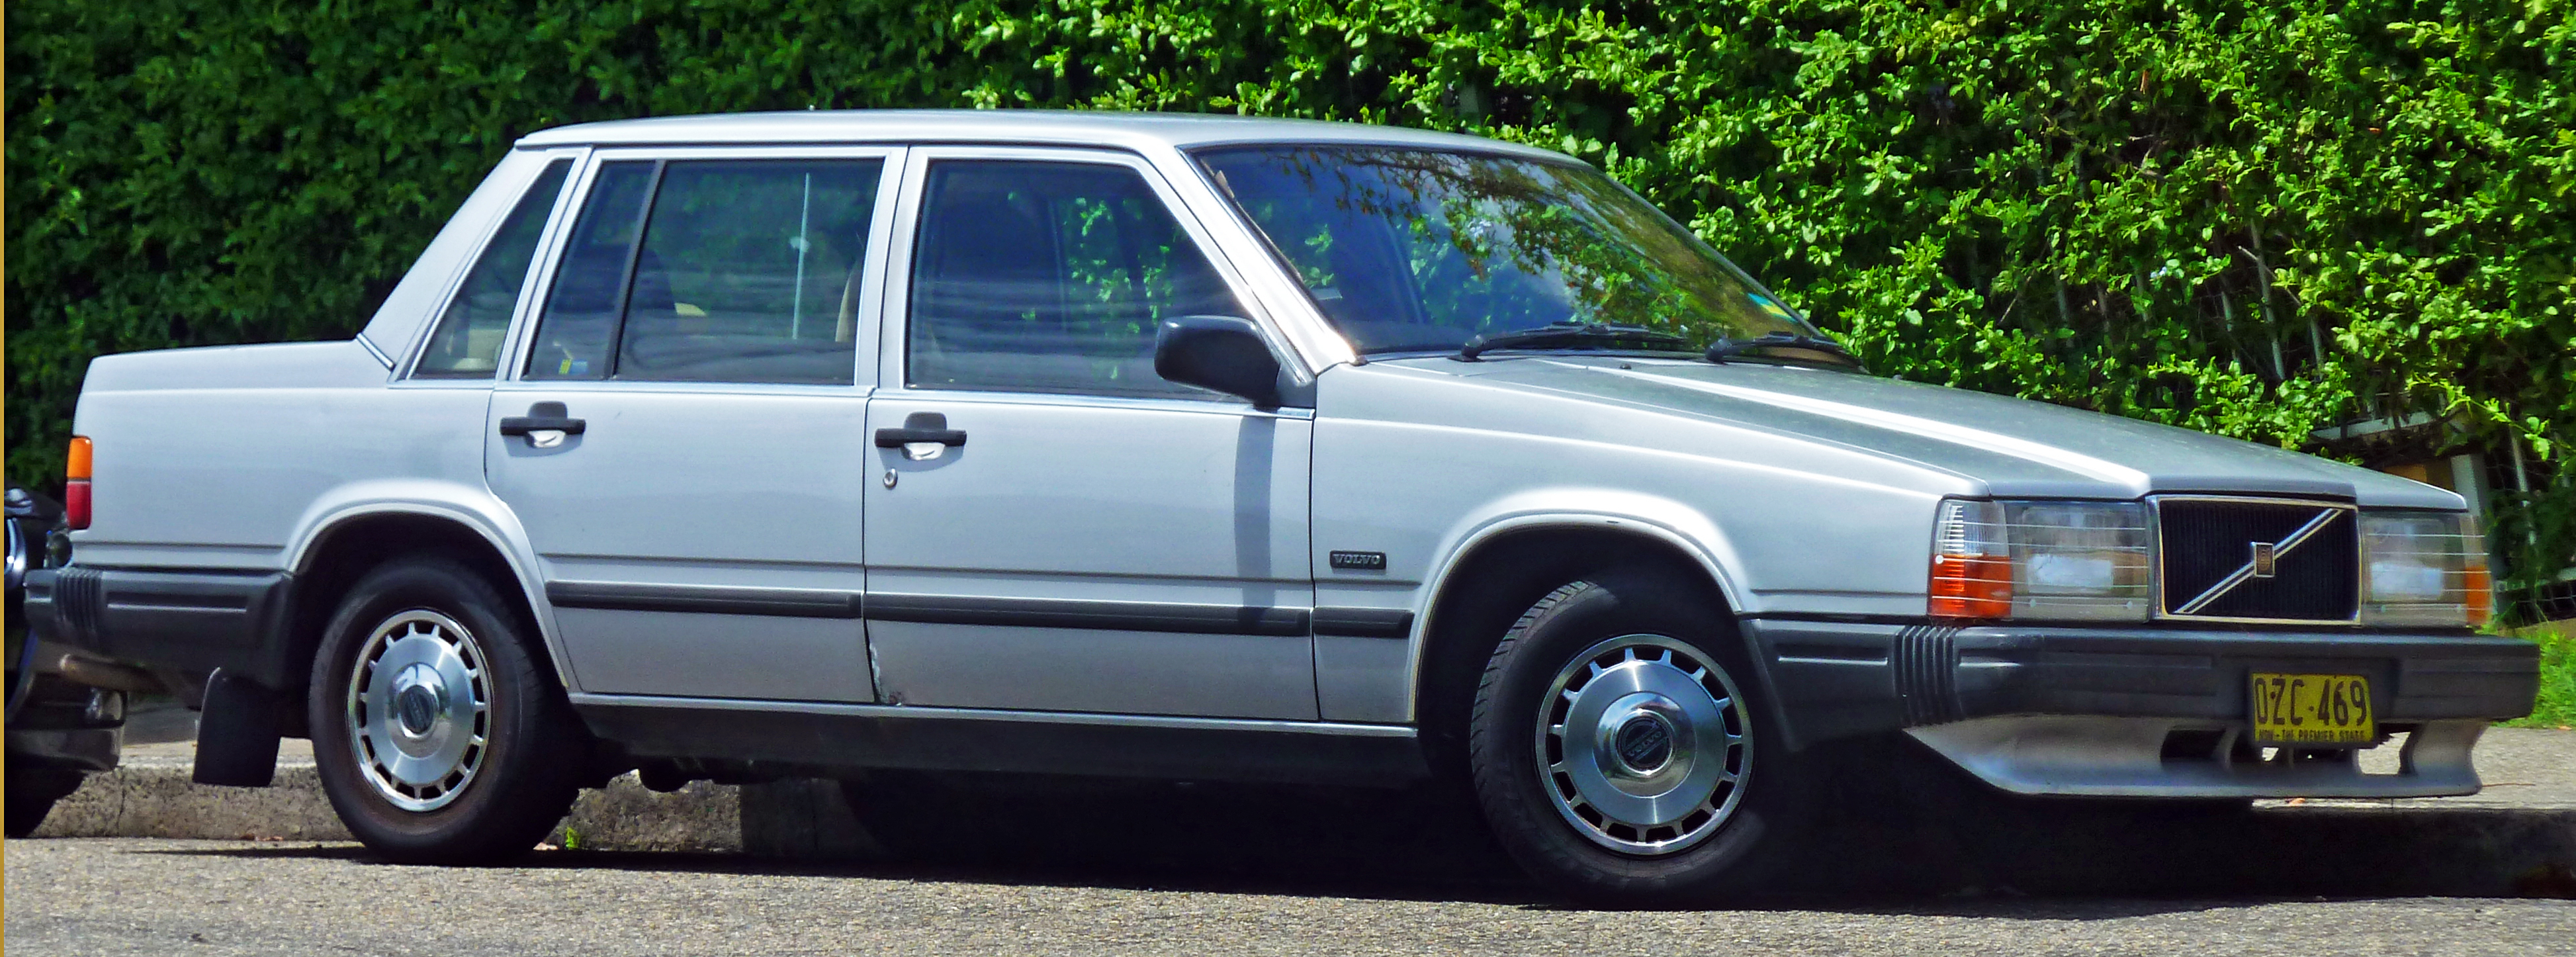 File:1985-1989 Volvo 740 GL sedan (2011-01-12).jpg - Wikimedia Commons